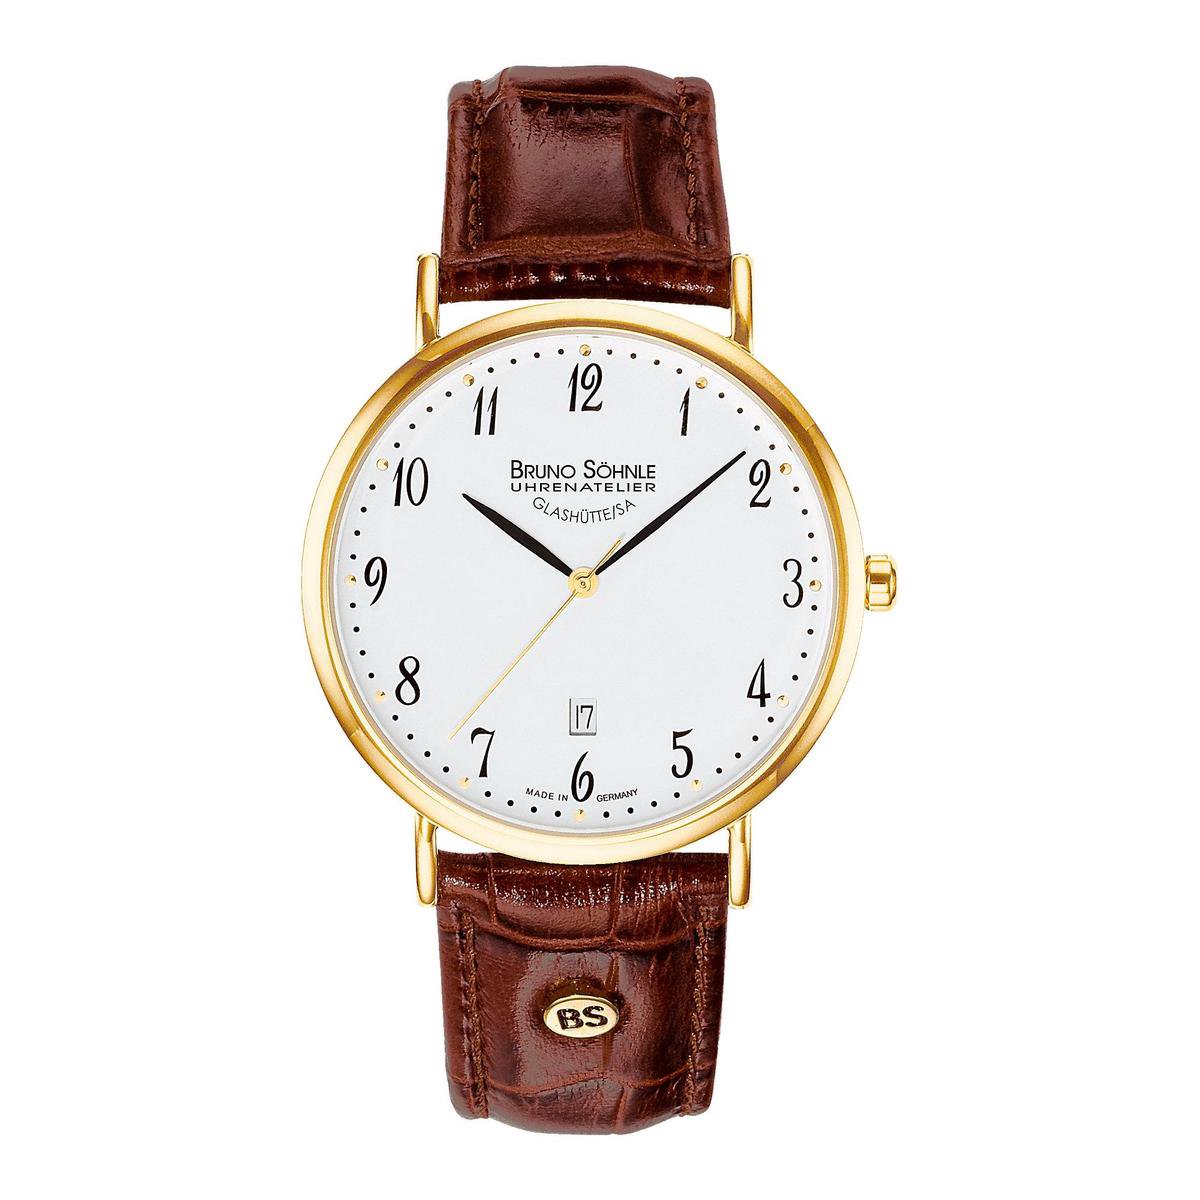 Bruno Soehnle Heren horloges quartz analoog One Size 84928771